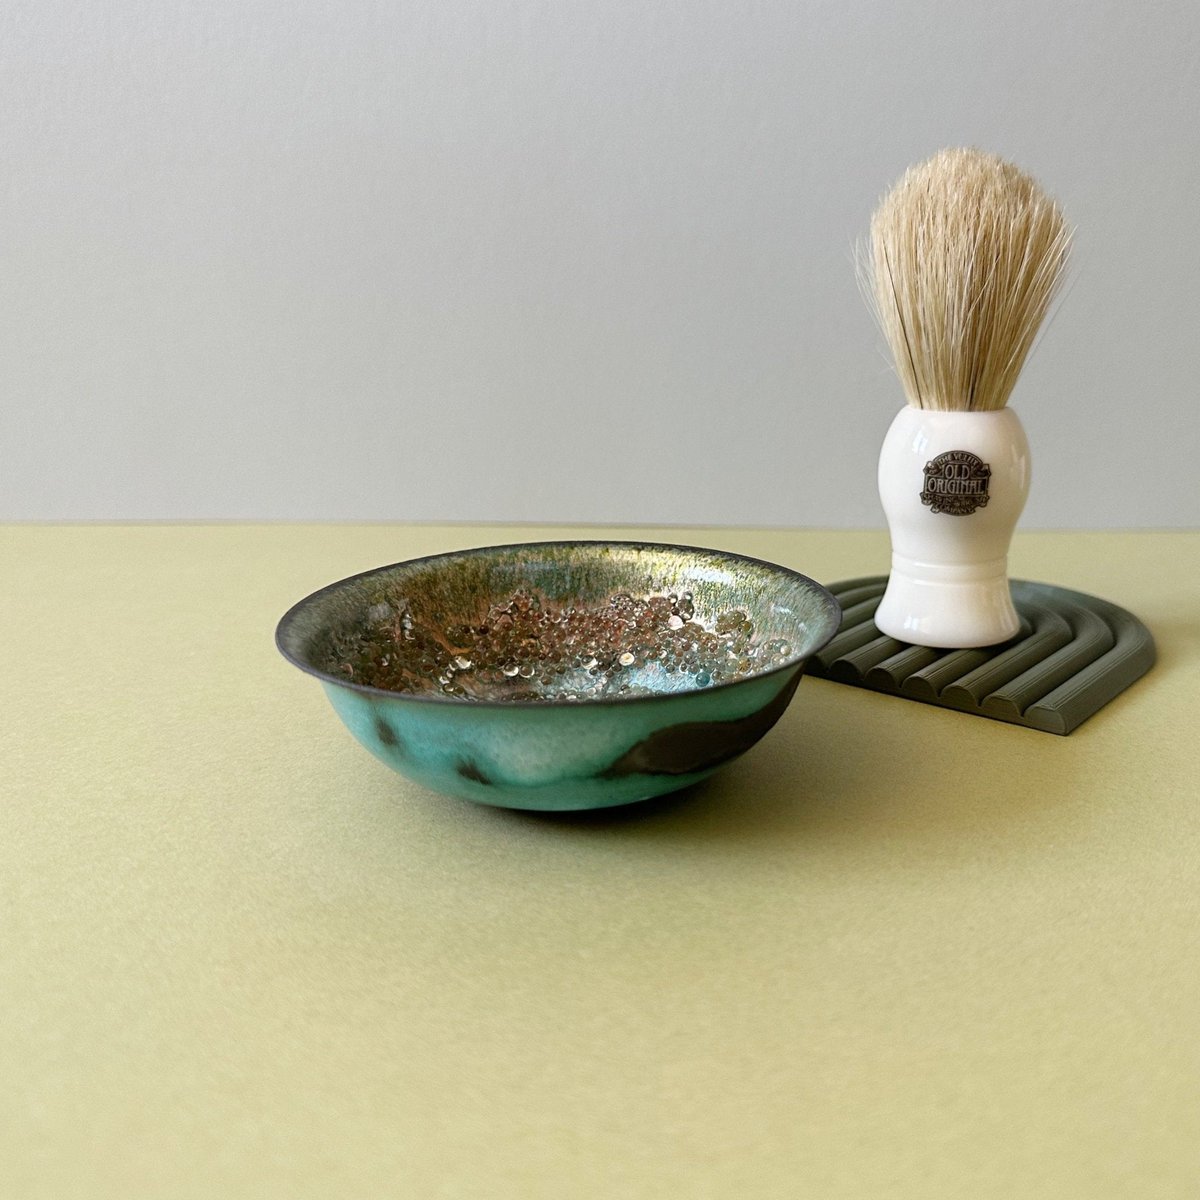 Unique Handmade Enamel Shaving Bowl for a Luxurious Wet Shave tuppu.net/af3c6b4 #bizbubble #MHHSBD ##UKGiftHour #HandmadeHour #UKHashtags #inbizhour #giftideas #shopsmall #GreenAndTurquoise